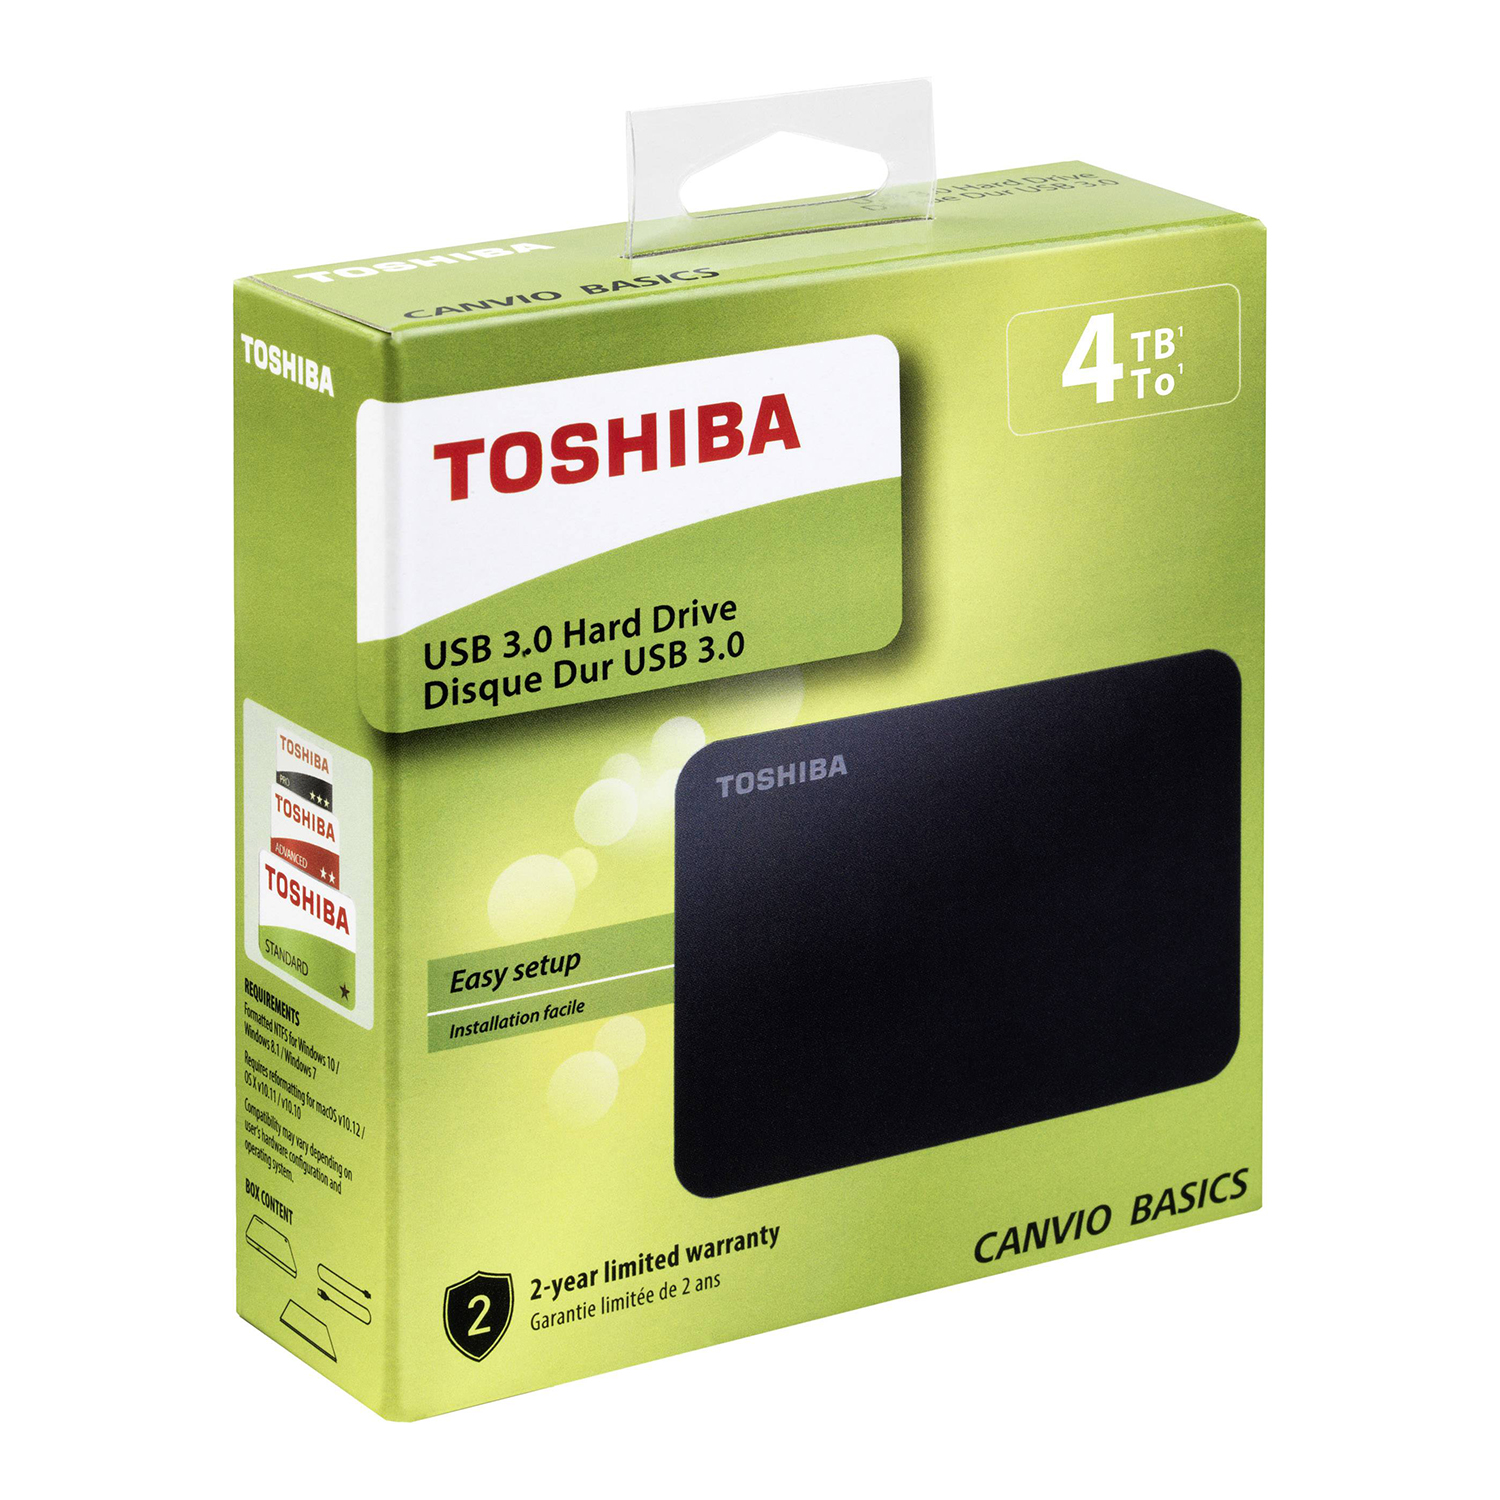 TOSHIBA Canvio Basics 4TB USB 3.0 Portable External Hard Disk Drive (HDTB440AK3CA) - Black